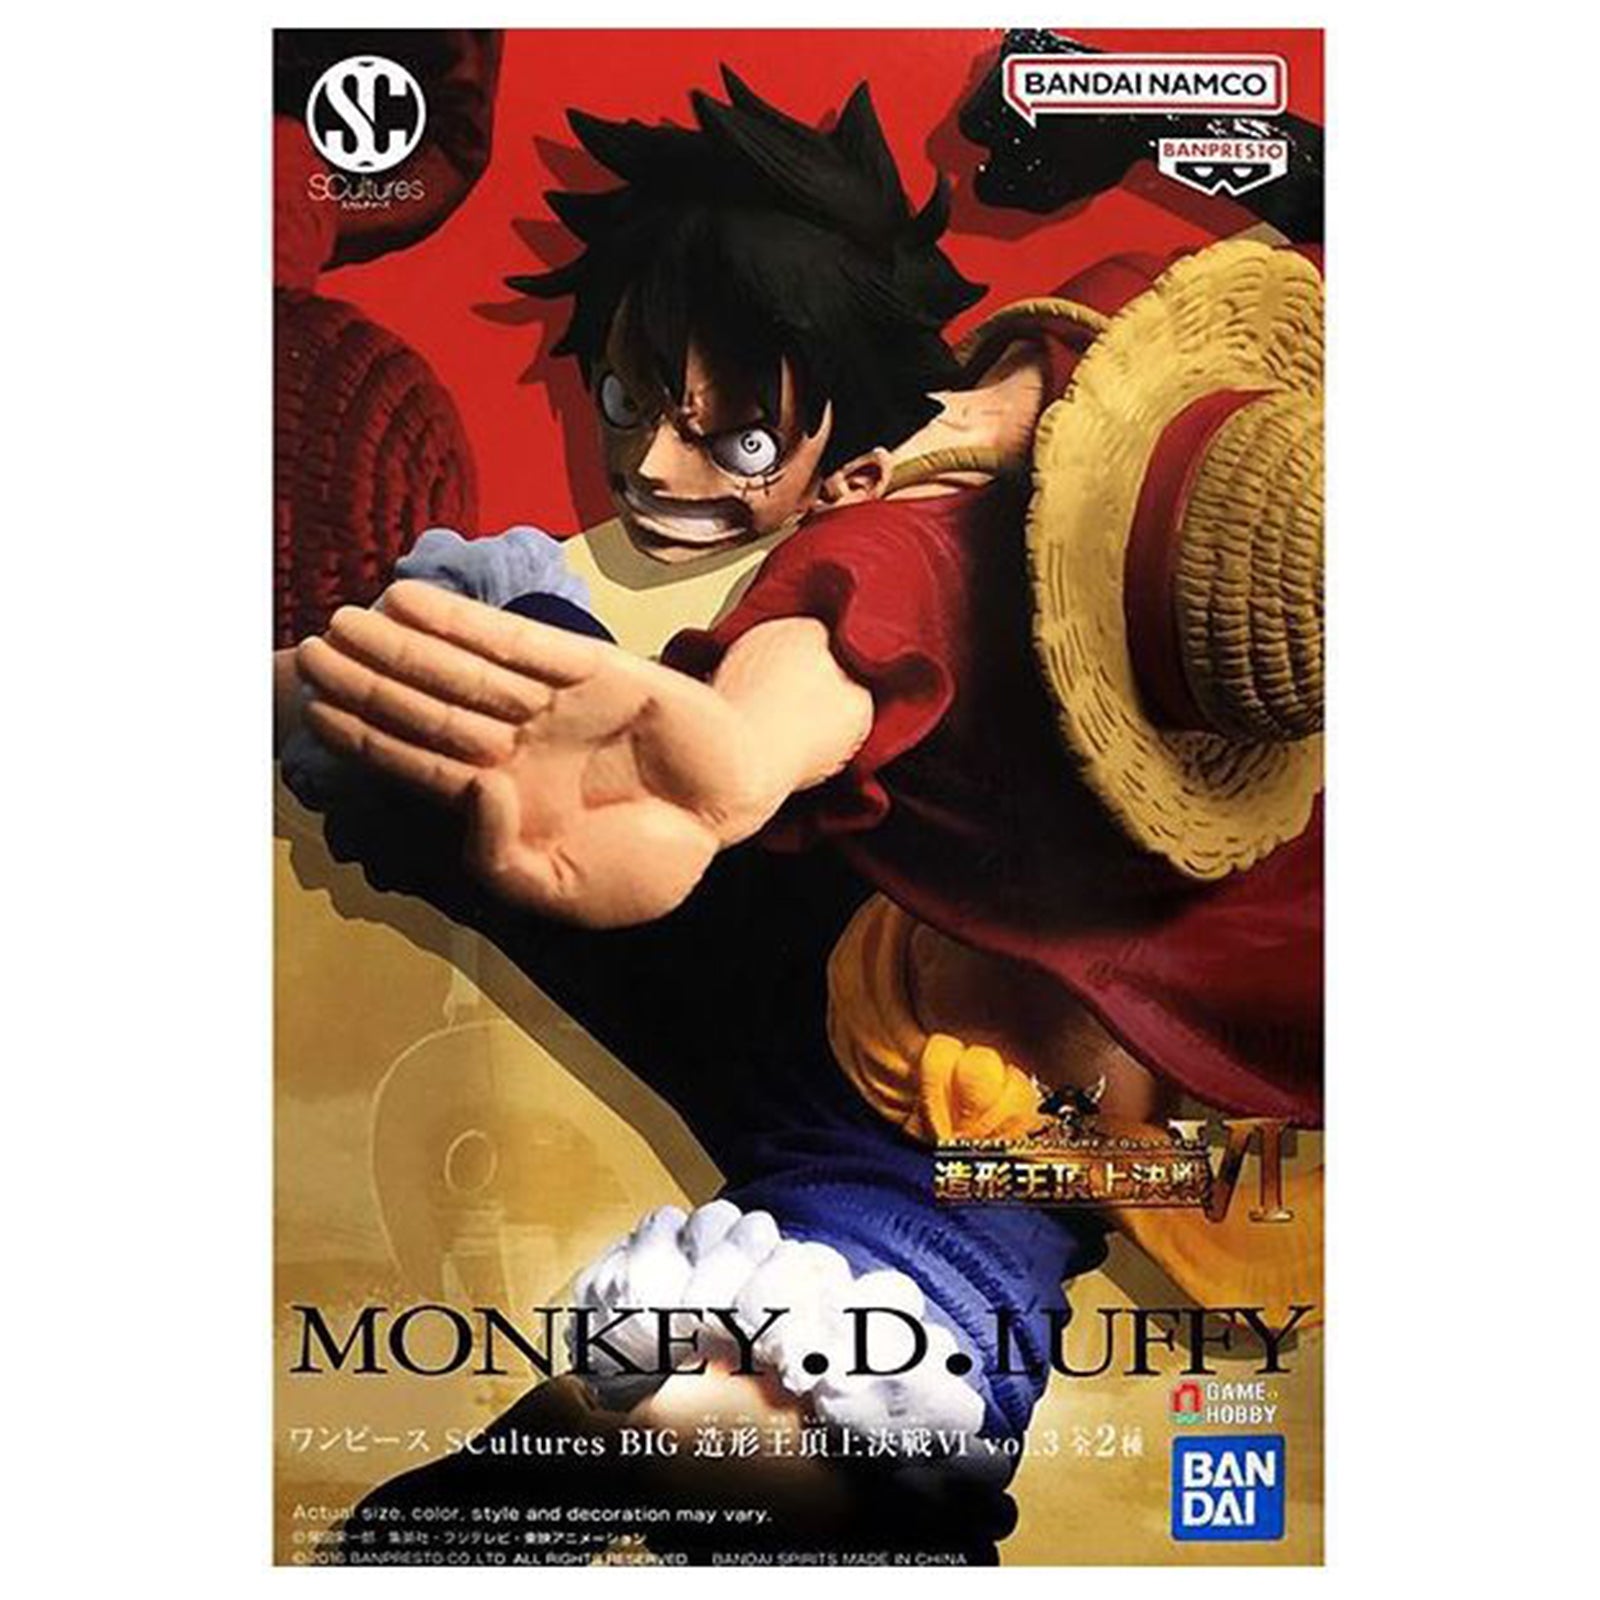 ANIME HEROES Bandai America One Piece, Monkey D. Luffy